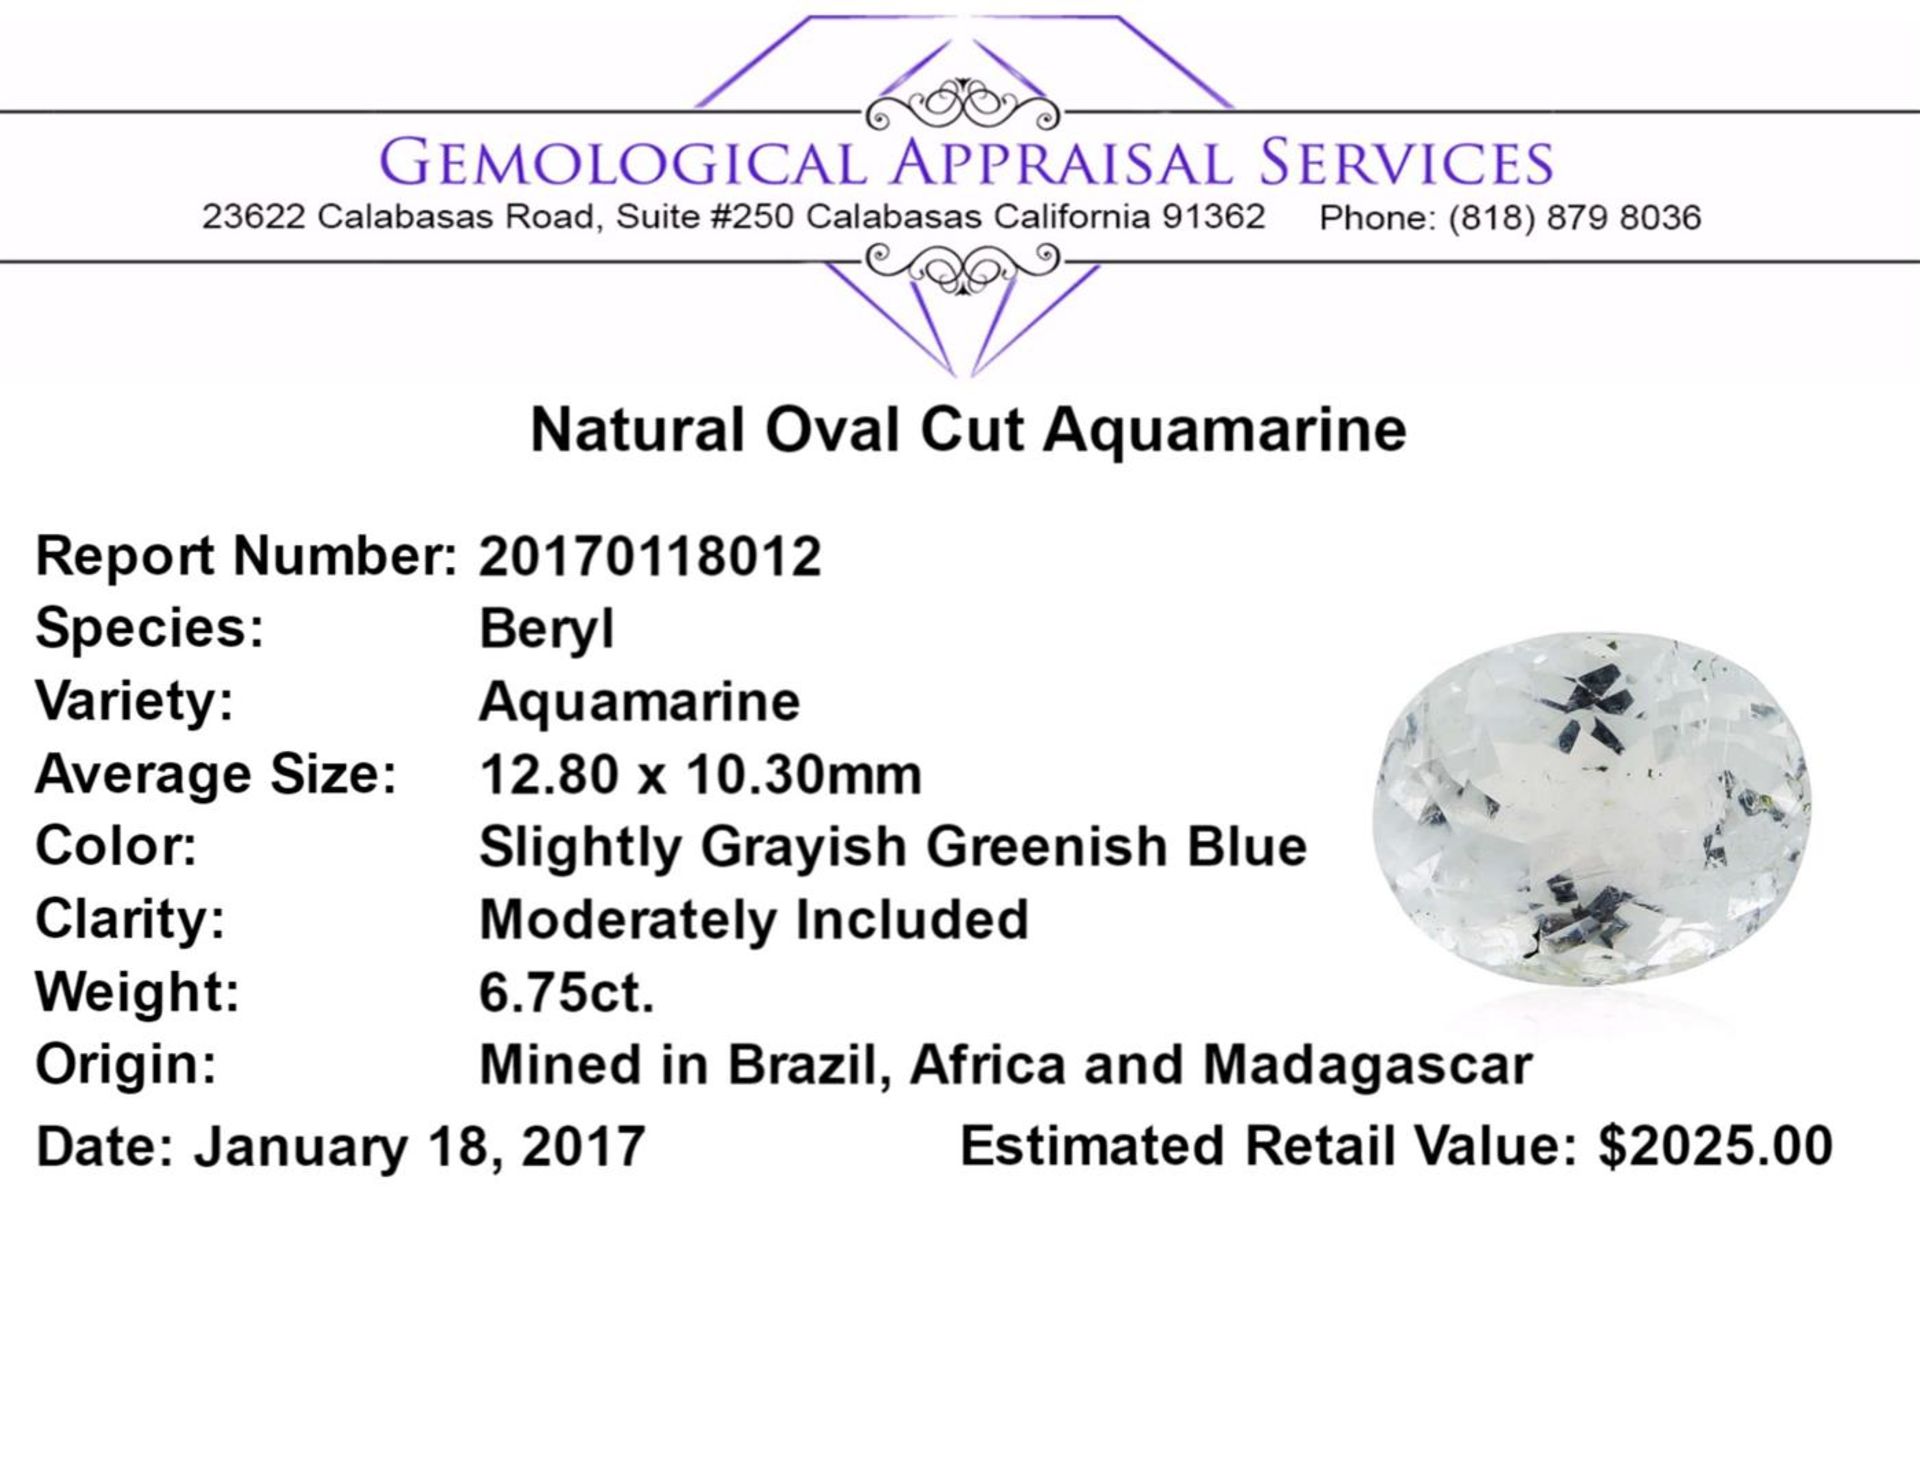 6.75 ct.Natural Oval Cut Aquamarine - Image 2 of 2